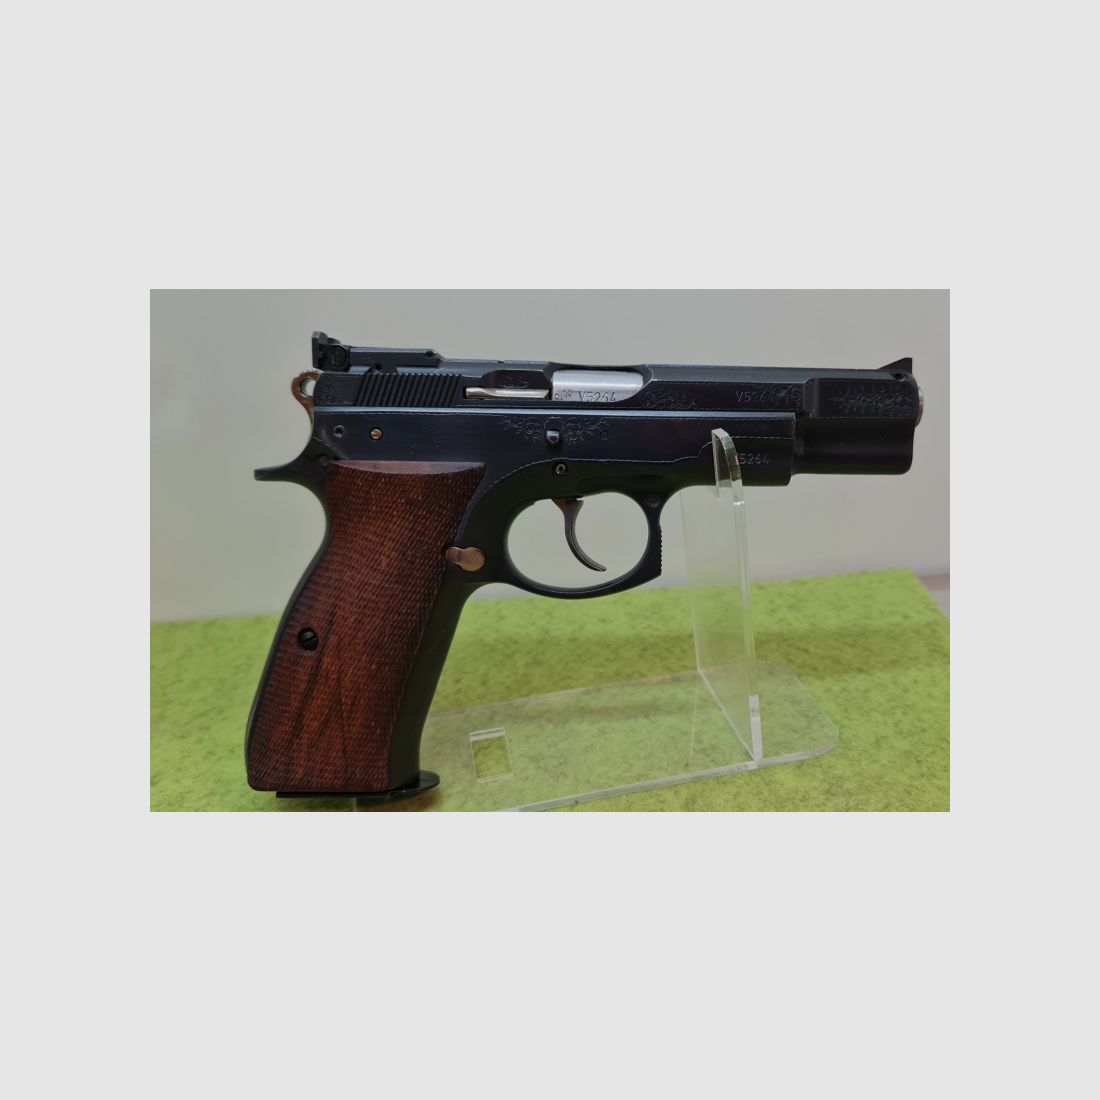 CZ 75 LUXUS in 9mm Luger sehr selten top top